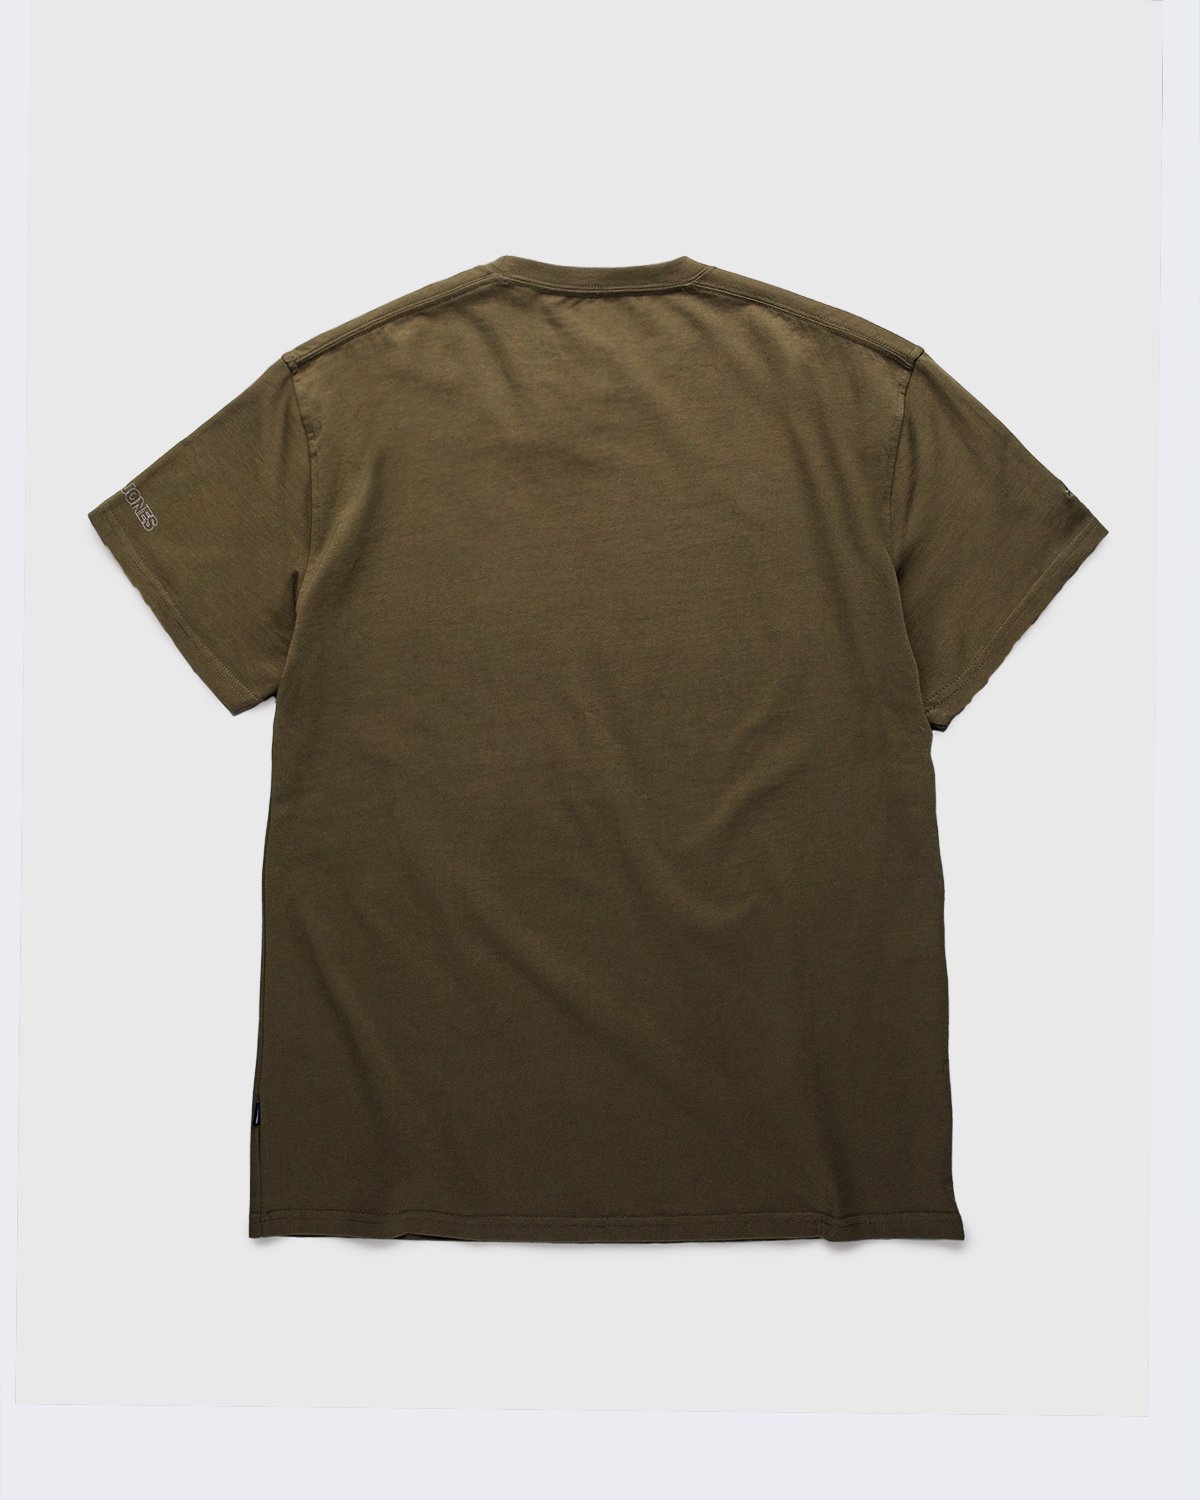 Converse x Kim Jones - T-Shirt Burnt Olive - Clothing - Green - Image 2